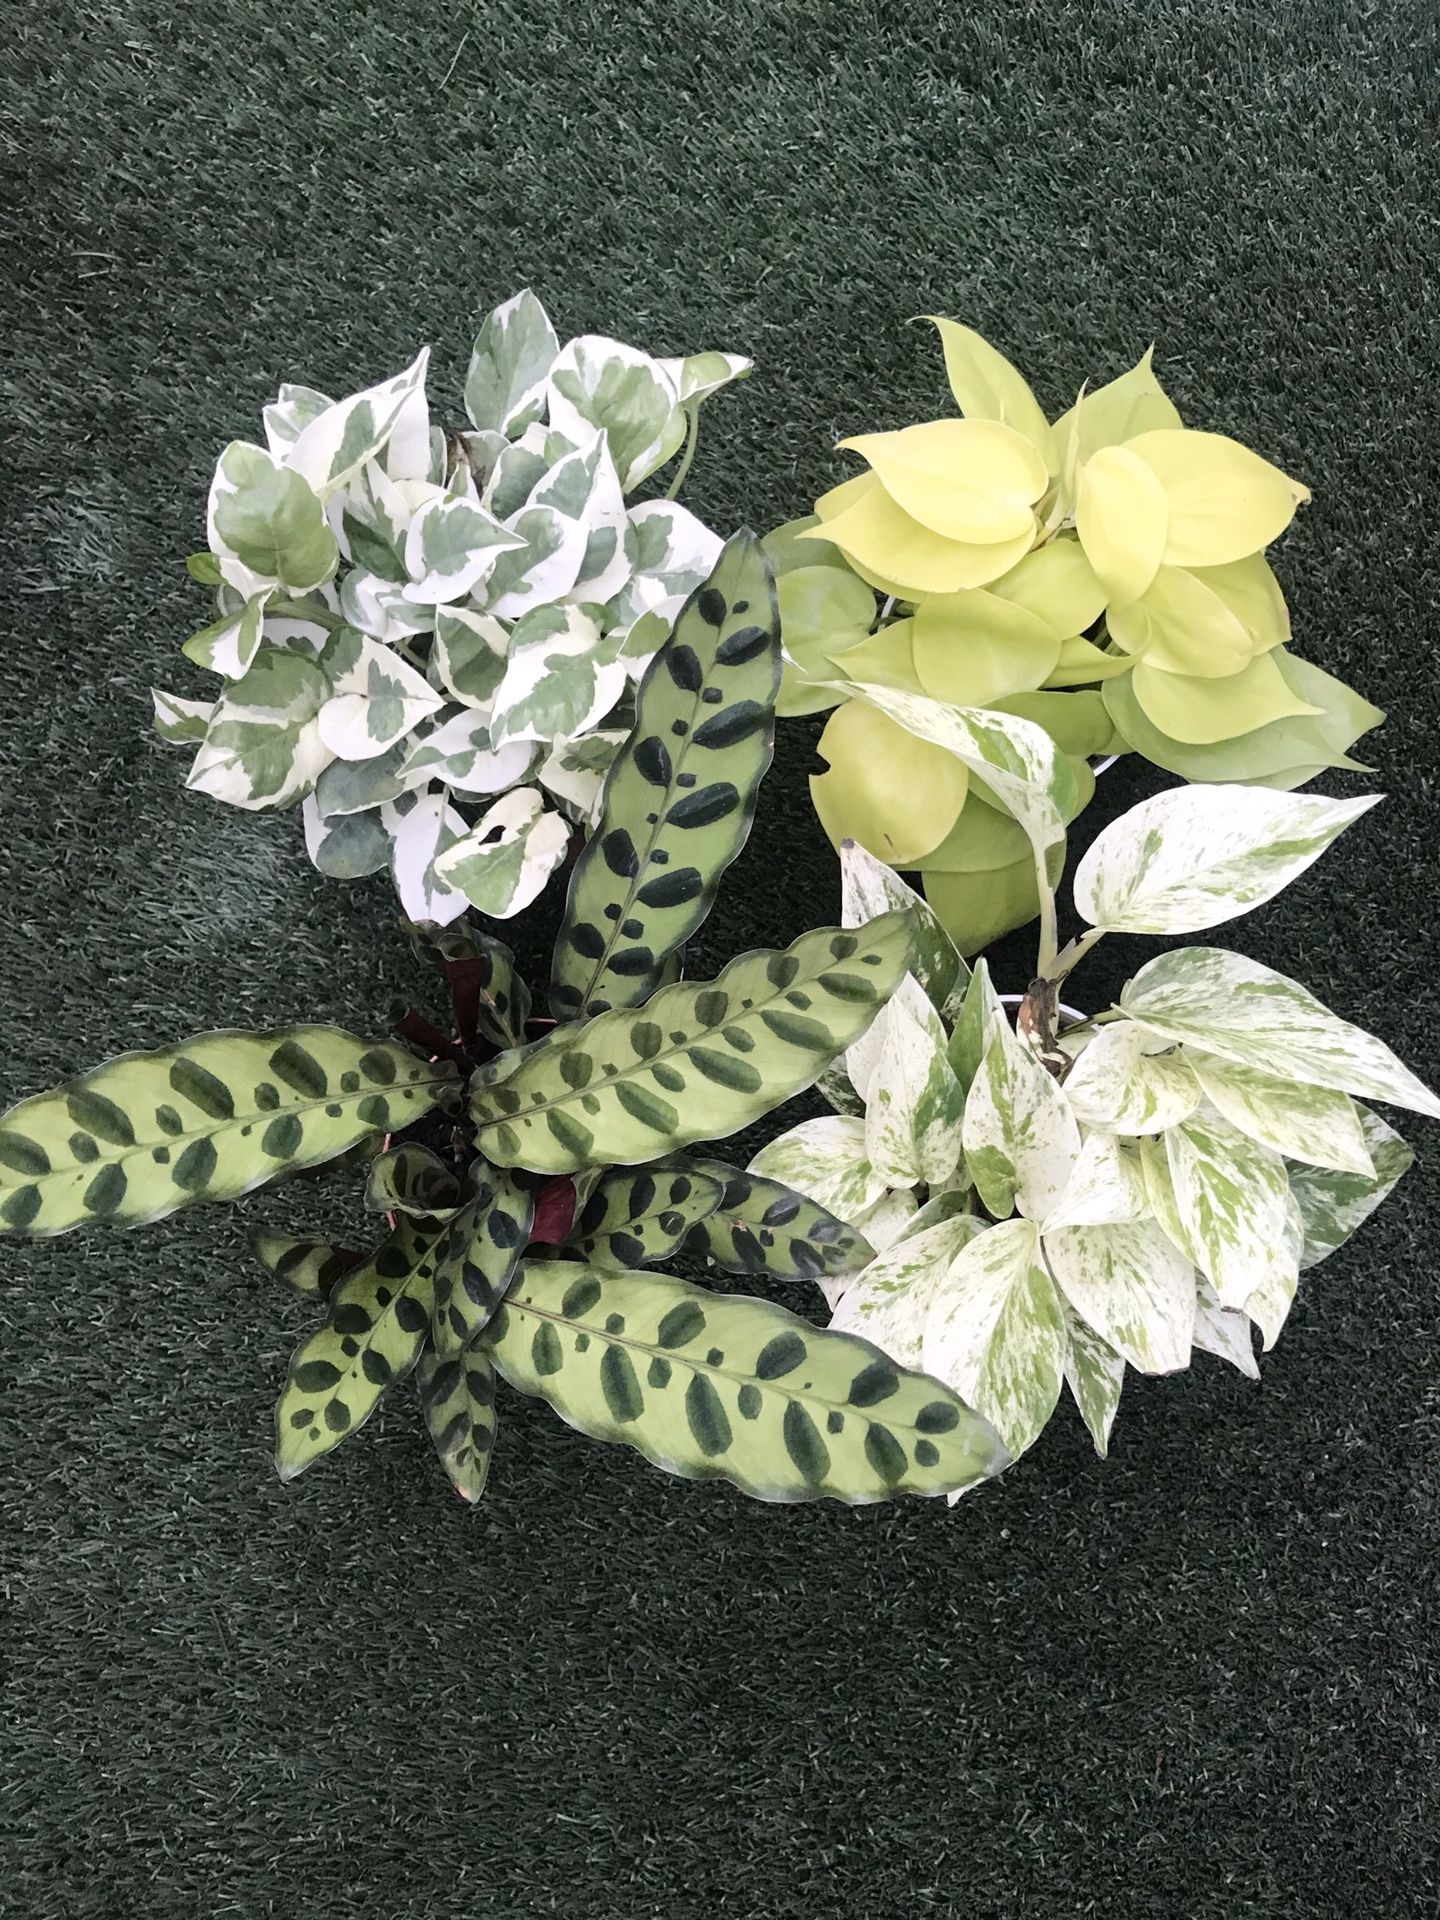 Plants (4”pot, Calathea rattle snake, Njoy & Marble Queen Pothos, Neon Brazil $25 all or $8 each)